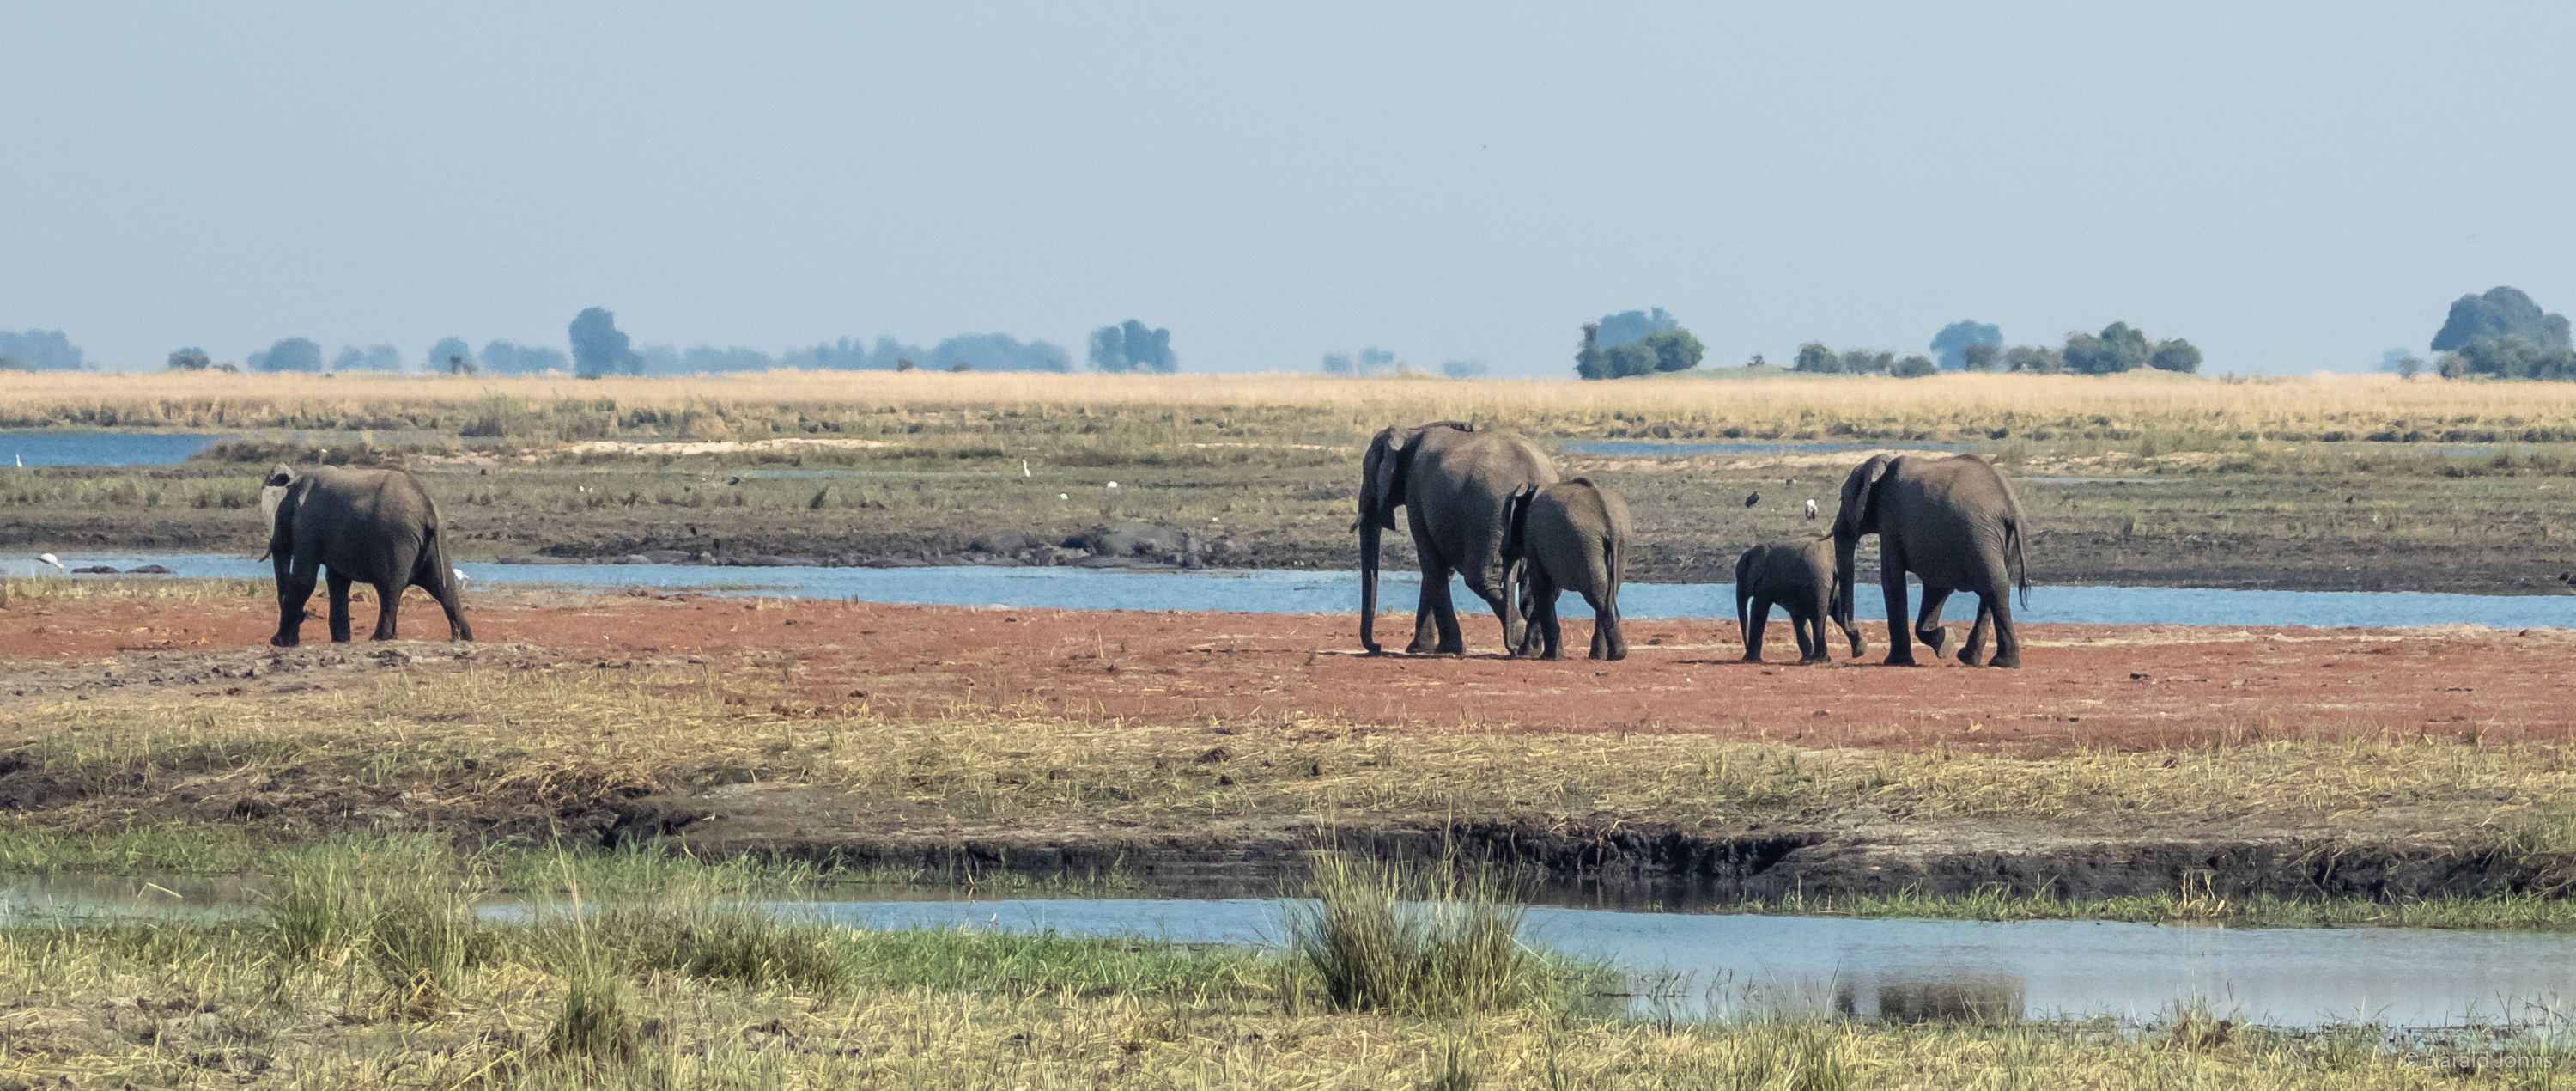 Elefanten Elefanten in der Cuando-Schleife bei Serondela im Chobe-Nationalpark